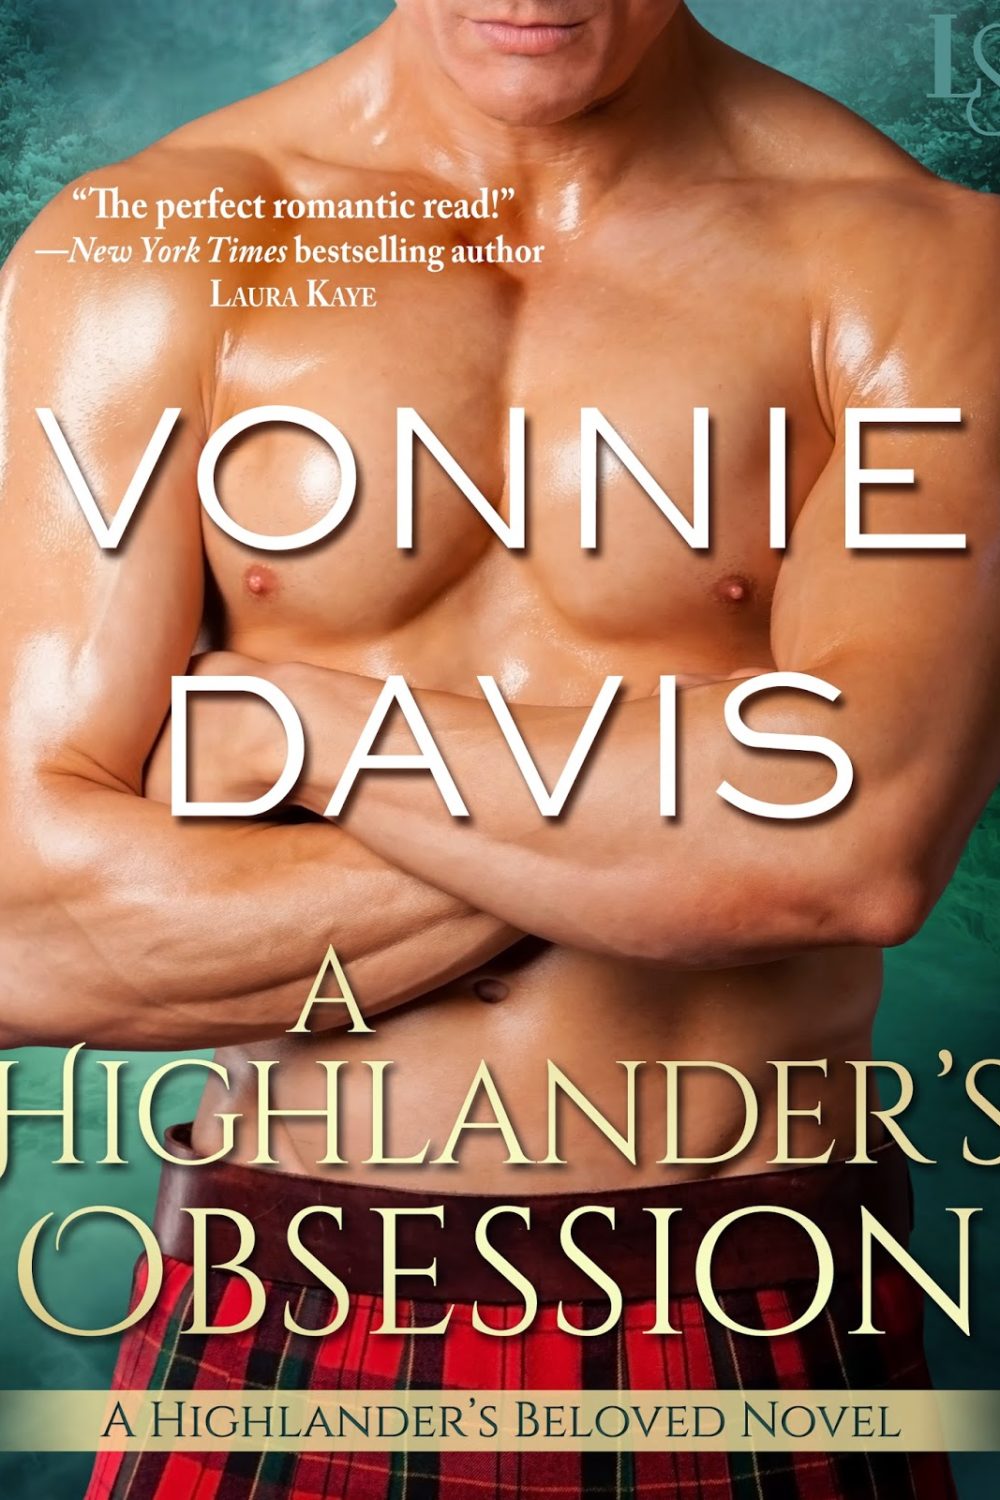 A Highlander's Obsession